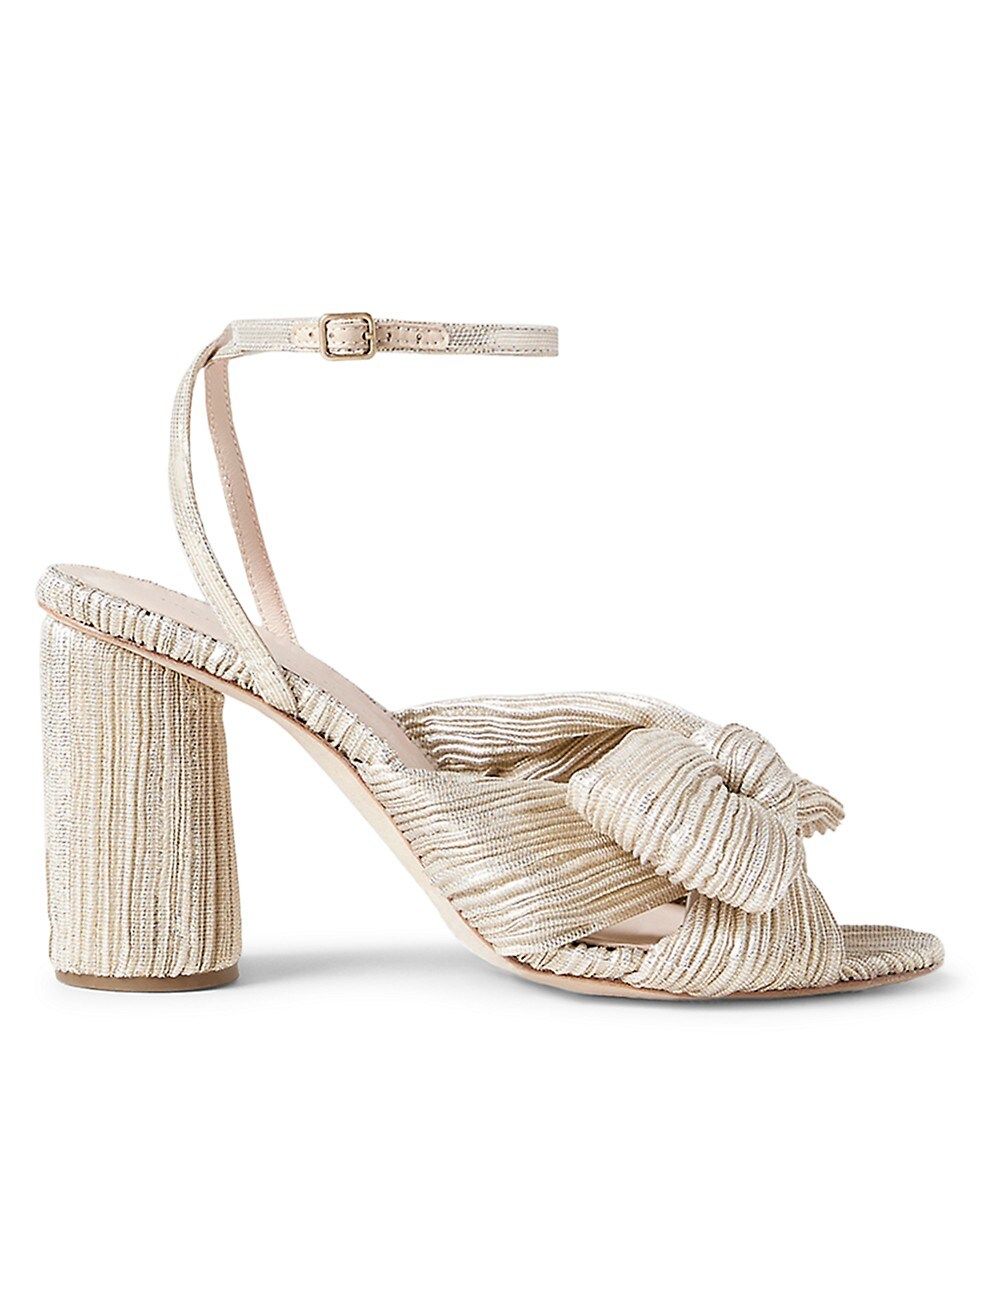 Loeffler Randall Camellia Knotted Metallic Sandals | Saks Fifth Avenue